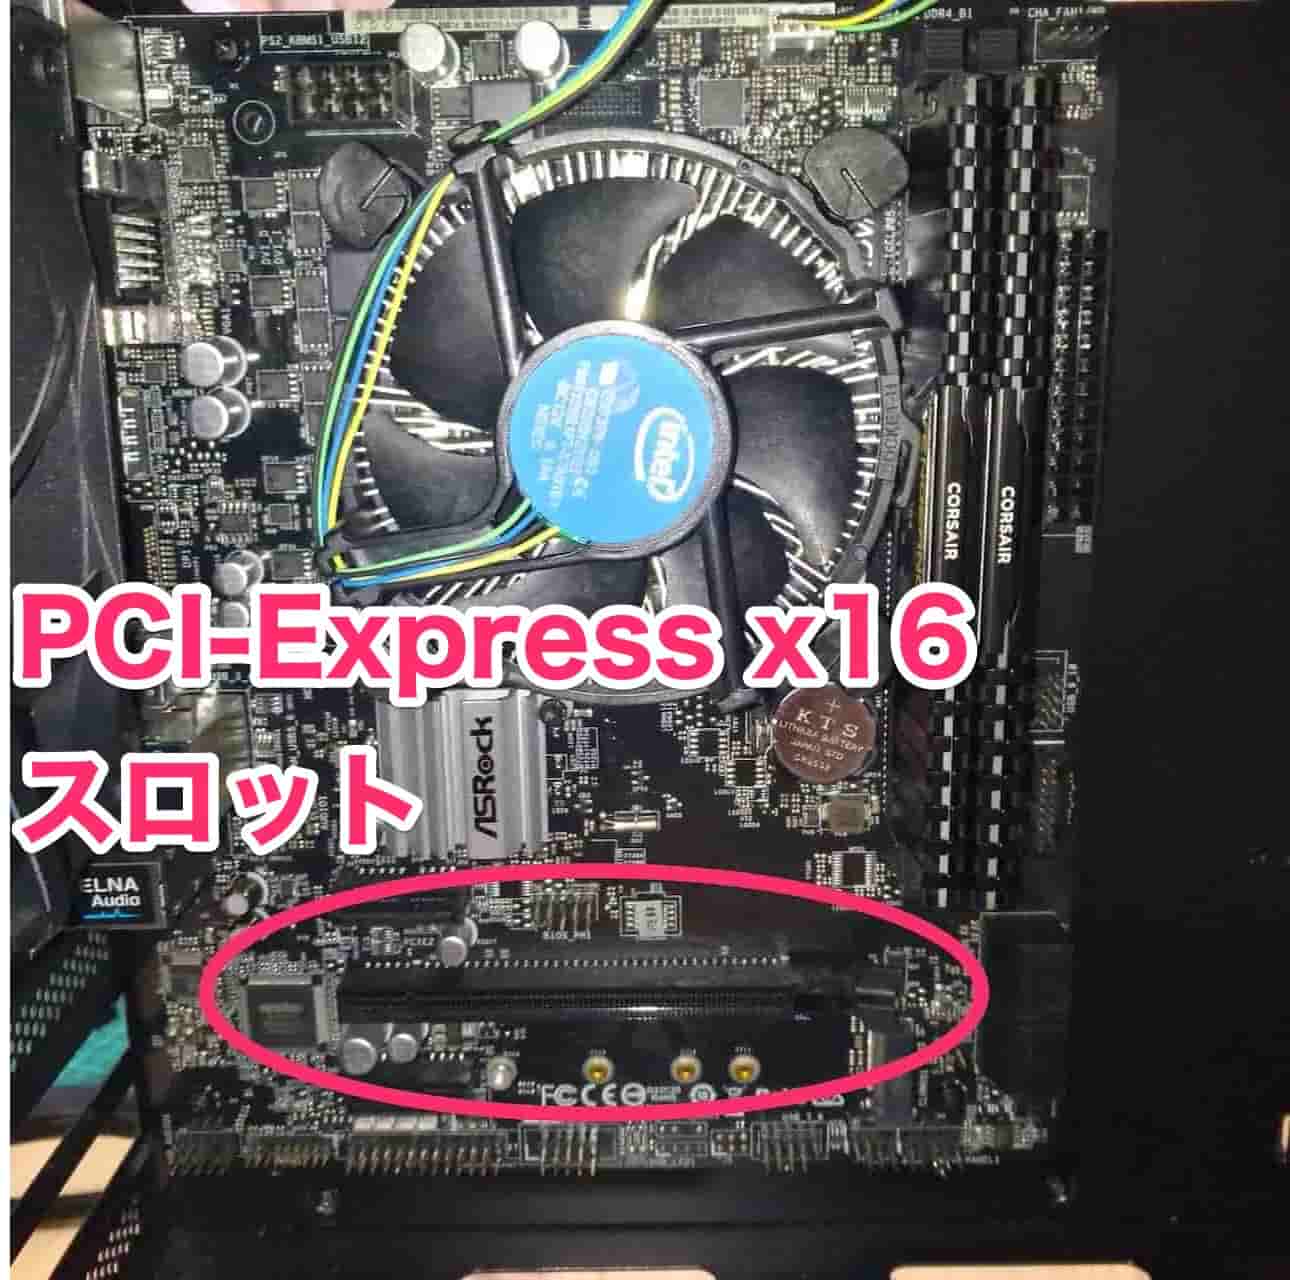 PCI-Express 3.0 x16